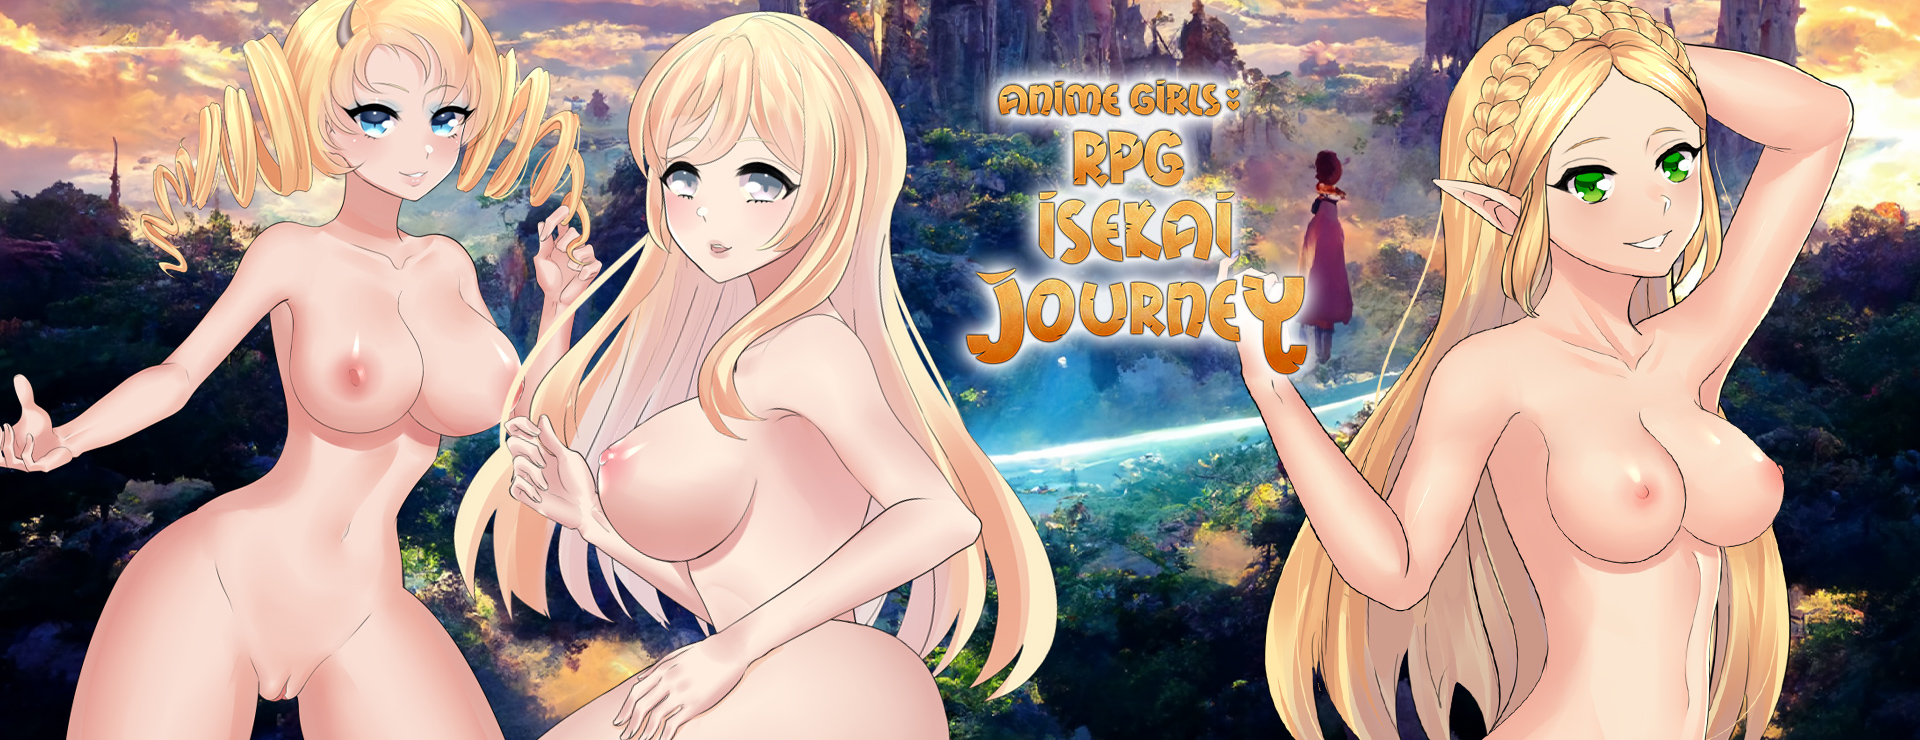 Anime RPG Isekai Journey - アクションアドベンチャー ゲーム